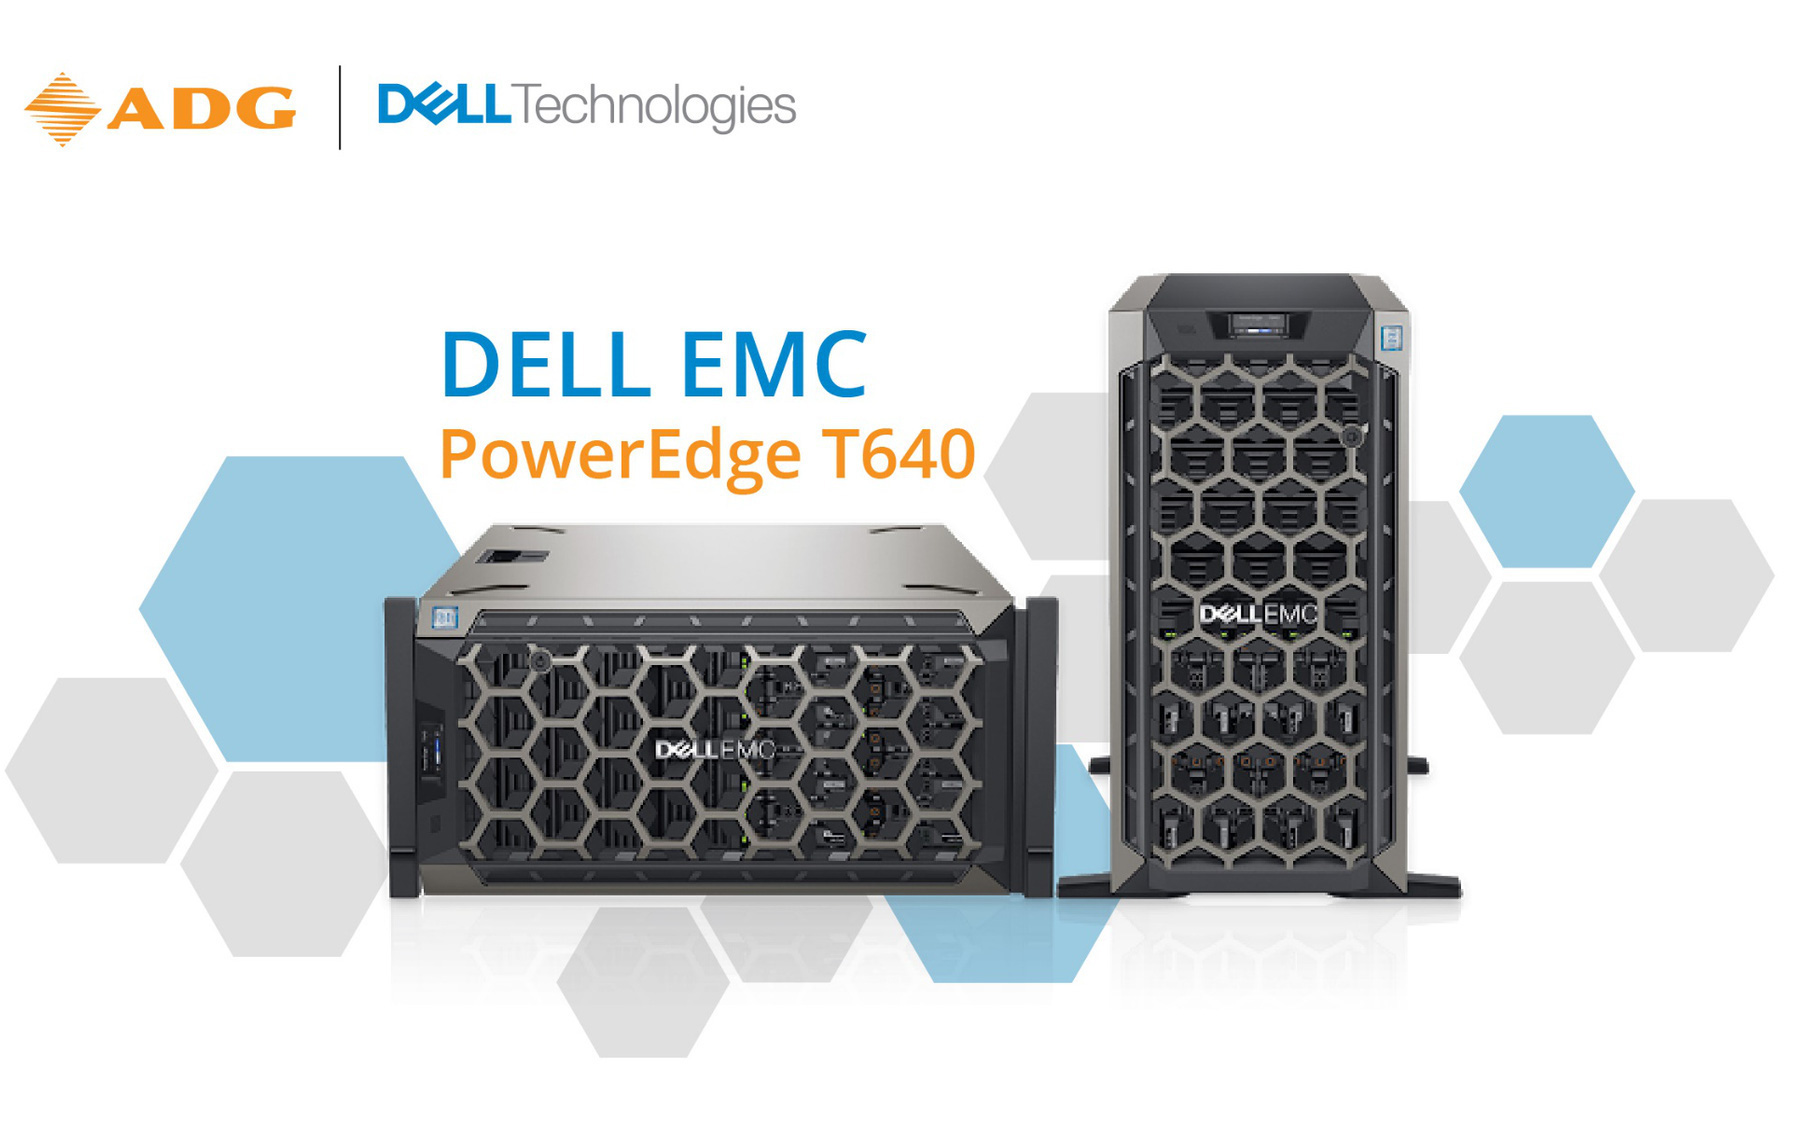 Khám phá máy chủ đa năng Dell EMC PowerEdge T640